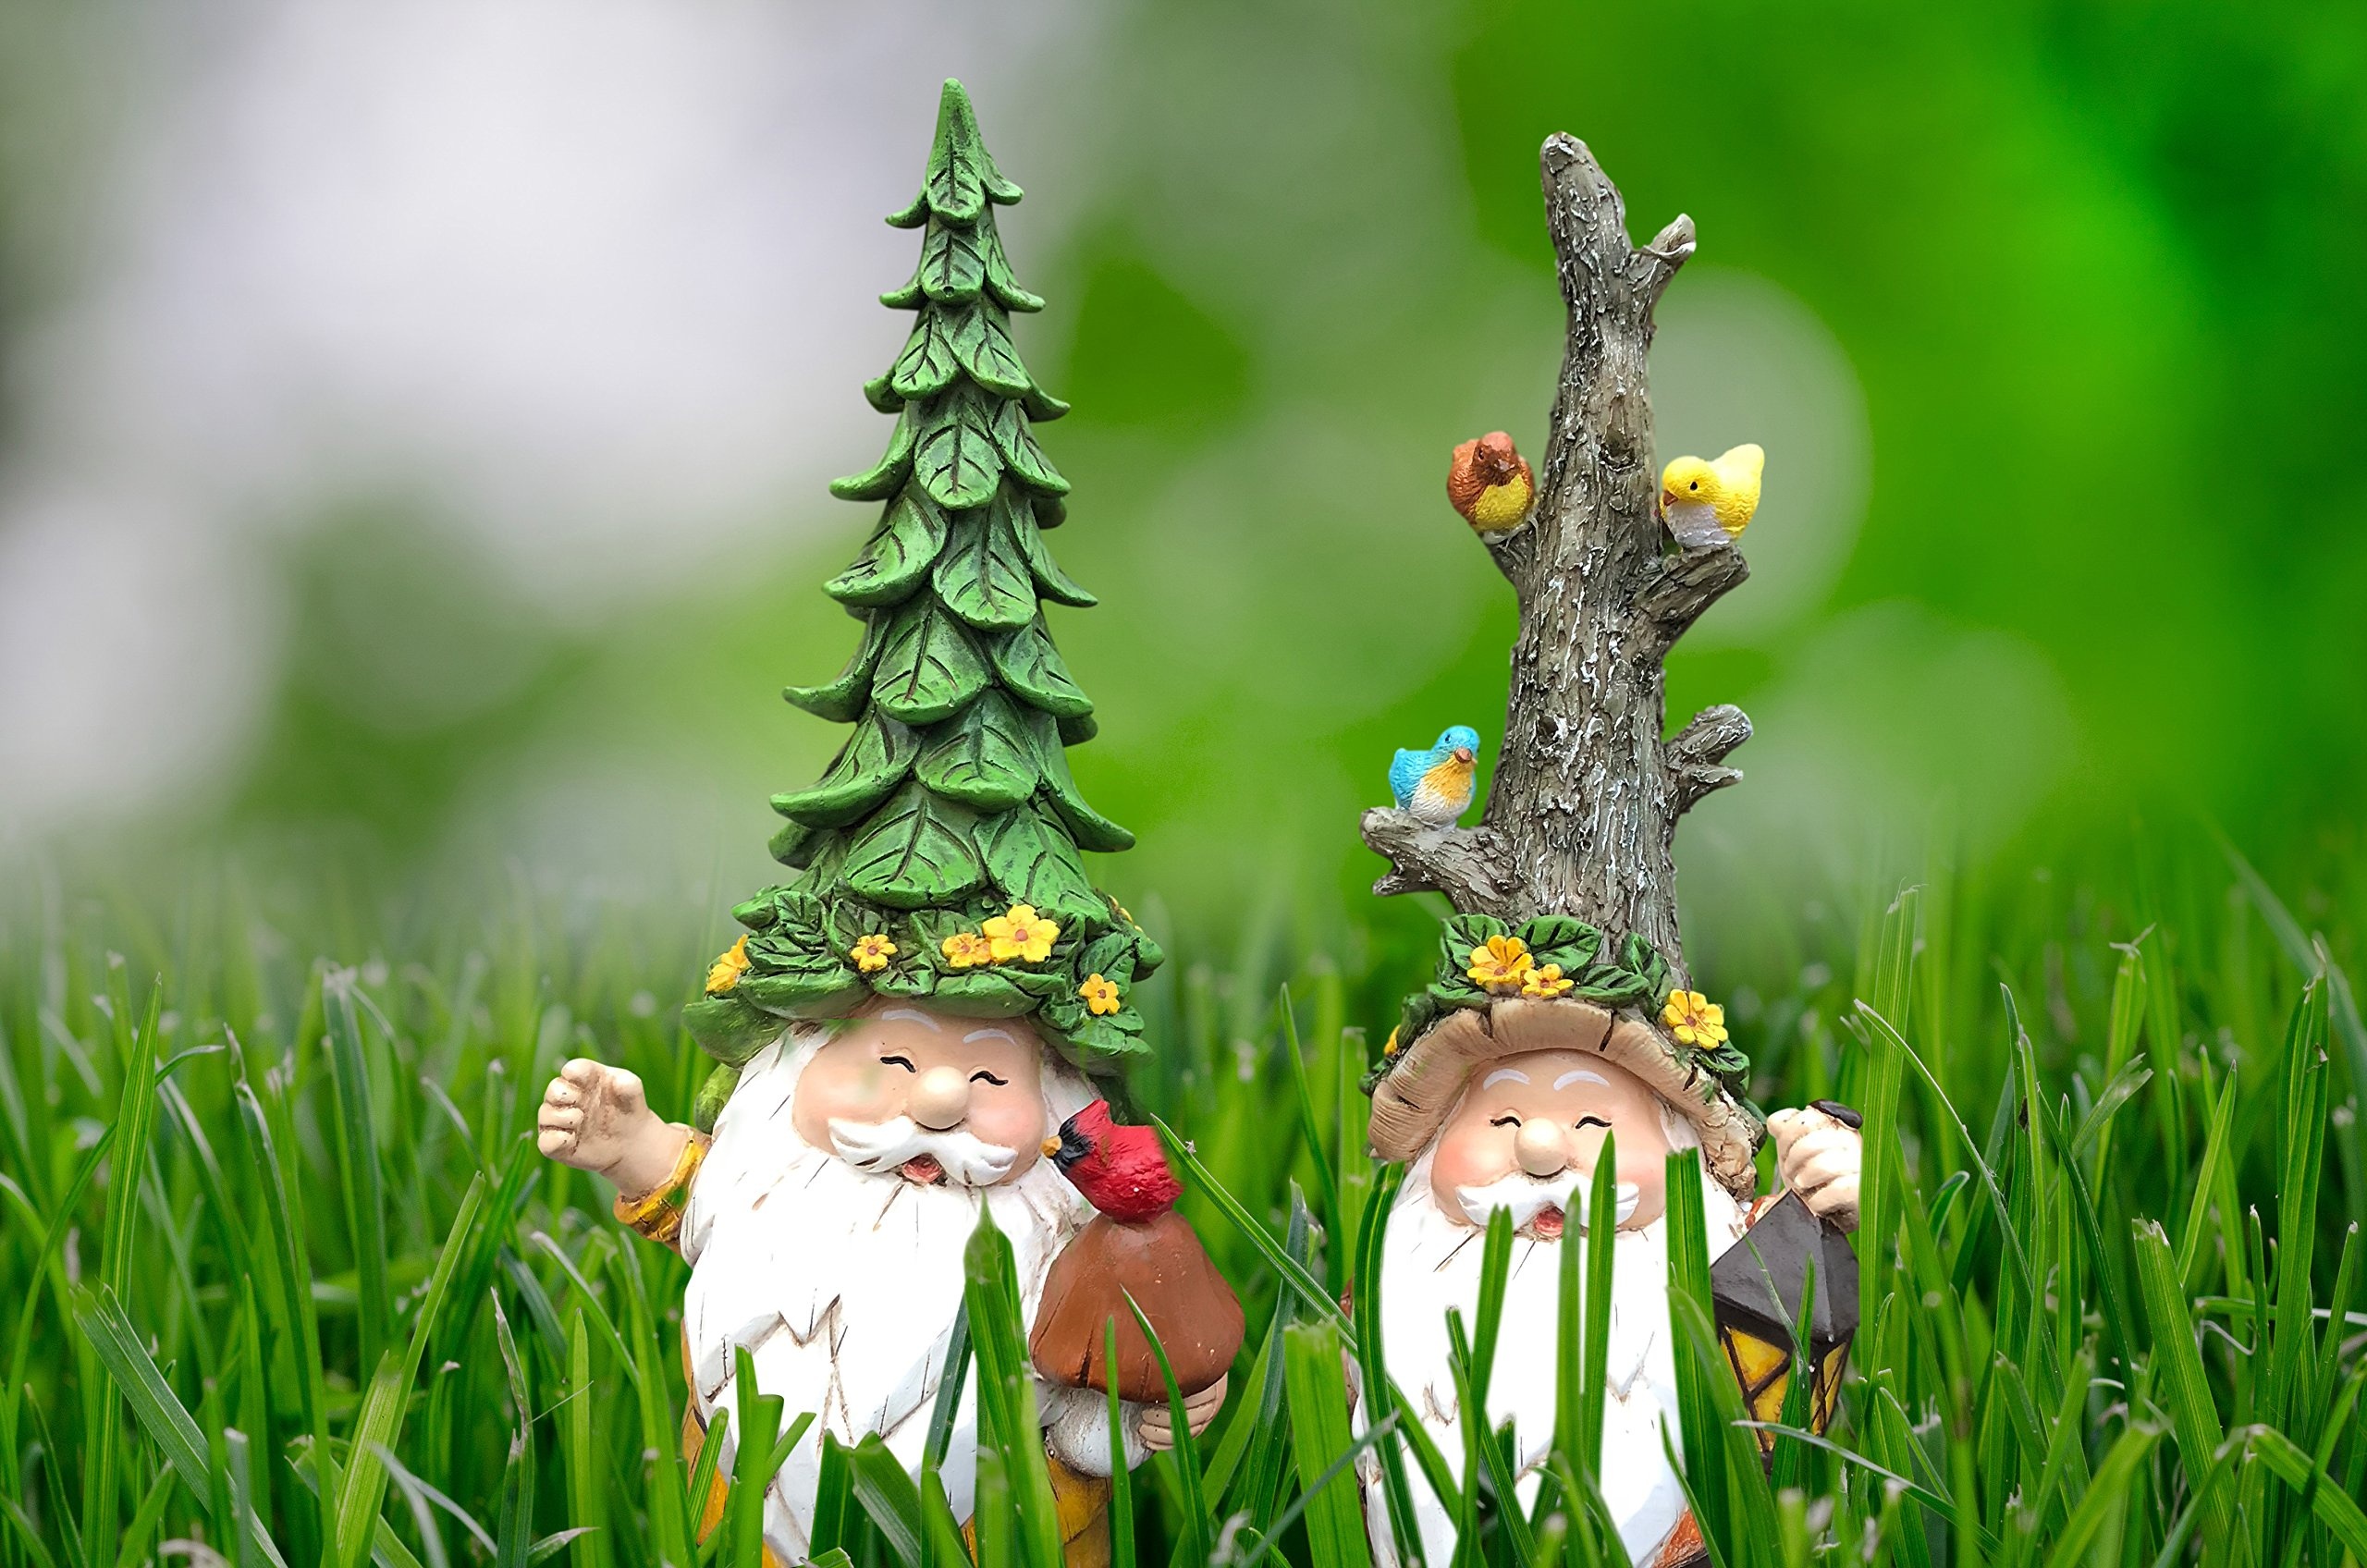 HD wallpaper, Cute Fall Gnomes, Gnome Gift Set, 2560X1700 Hd Desktop, Desktop Hd Garden Gnome Wallpaper, Outdoor Garden Dcor, Garden Gnome Statues